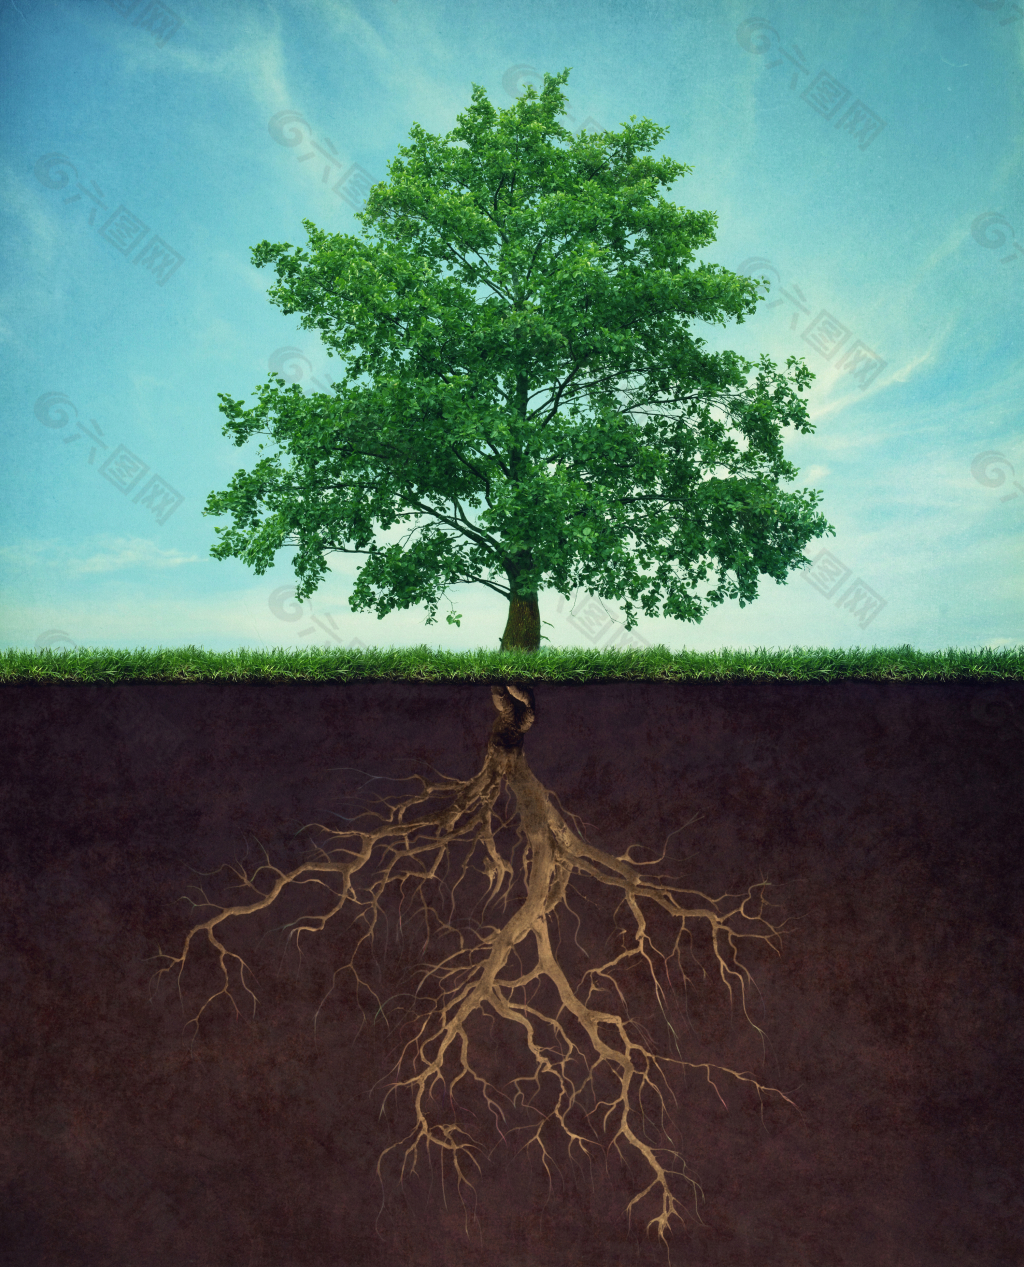 75,647 Tree growing image 图片、库存照片和矢量图 | Shutterstock